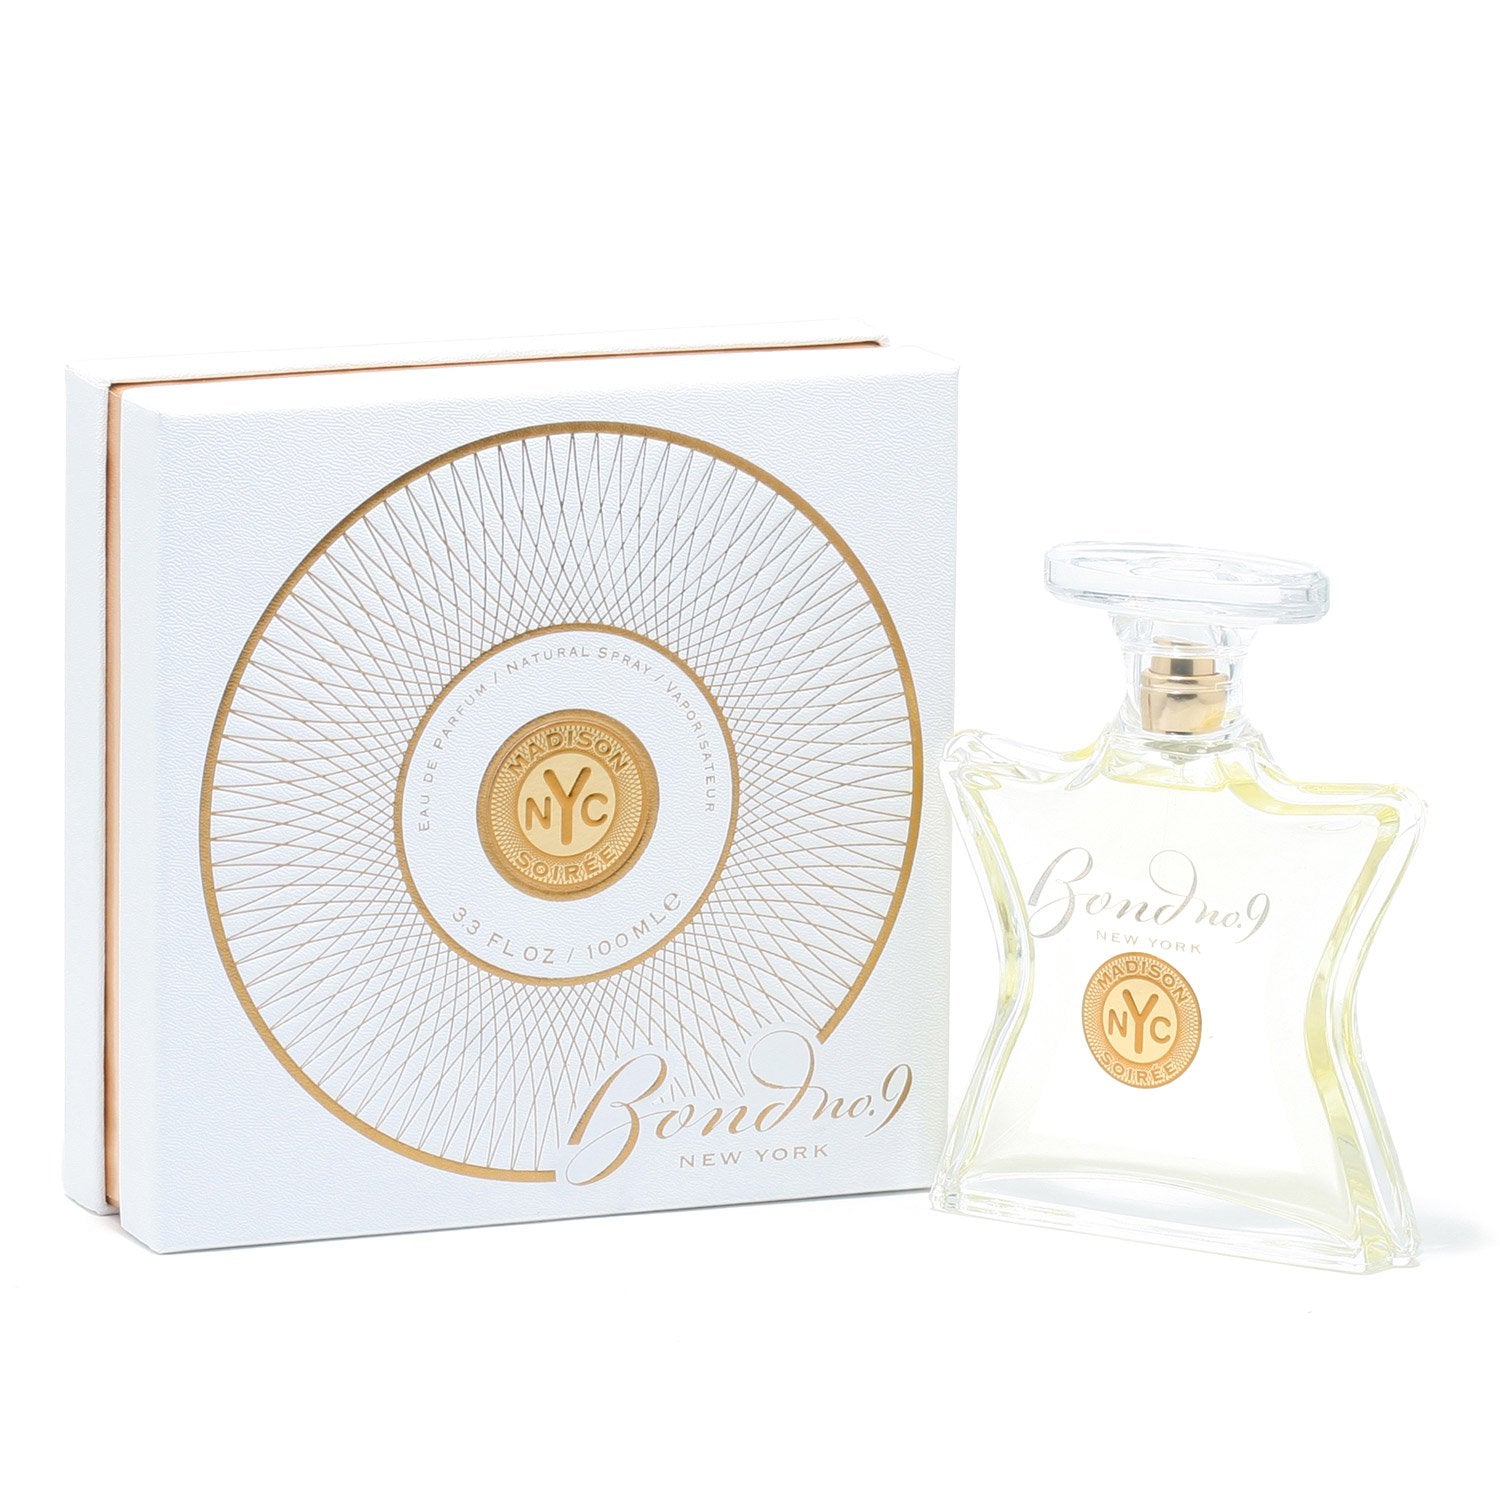 Perfume - BOND NO 9 MADISON SOIREE FOR WOMEN - EAU DE PARFUM SPRAY, 3.4 OZ